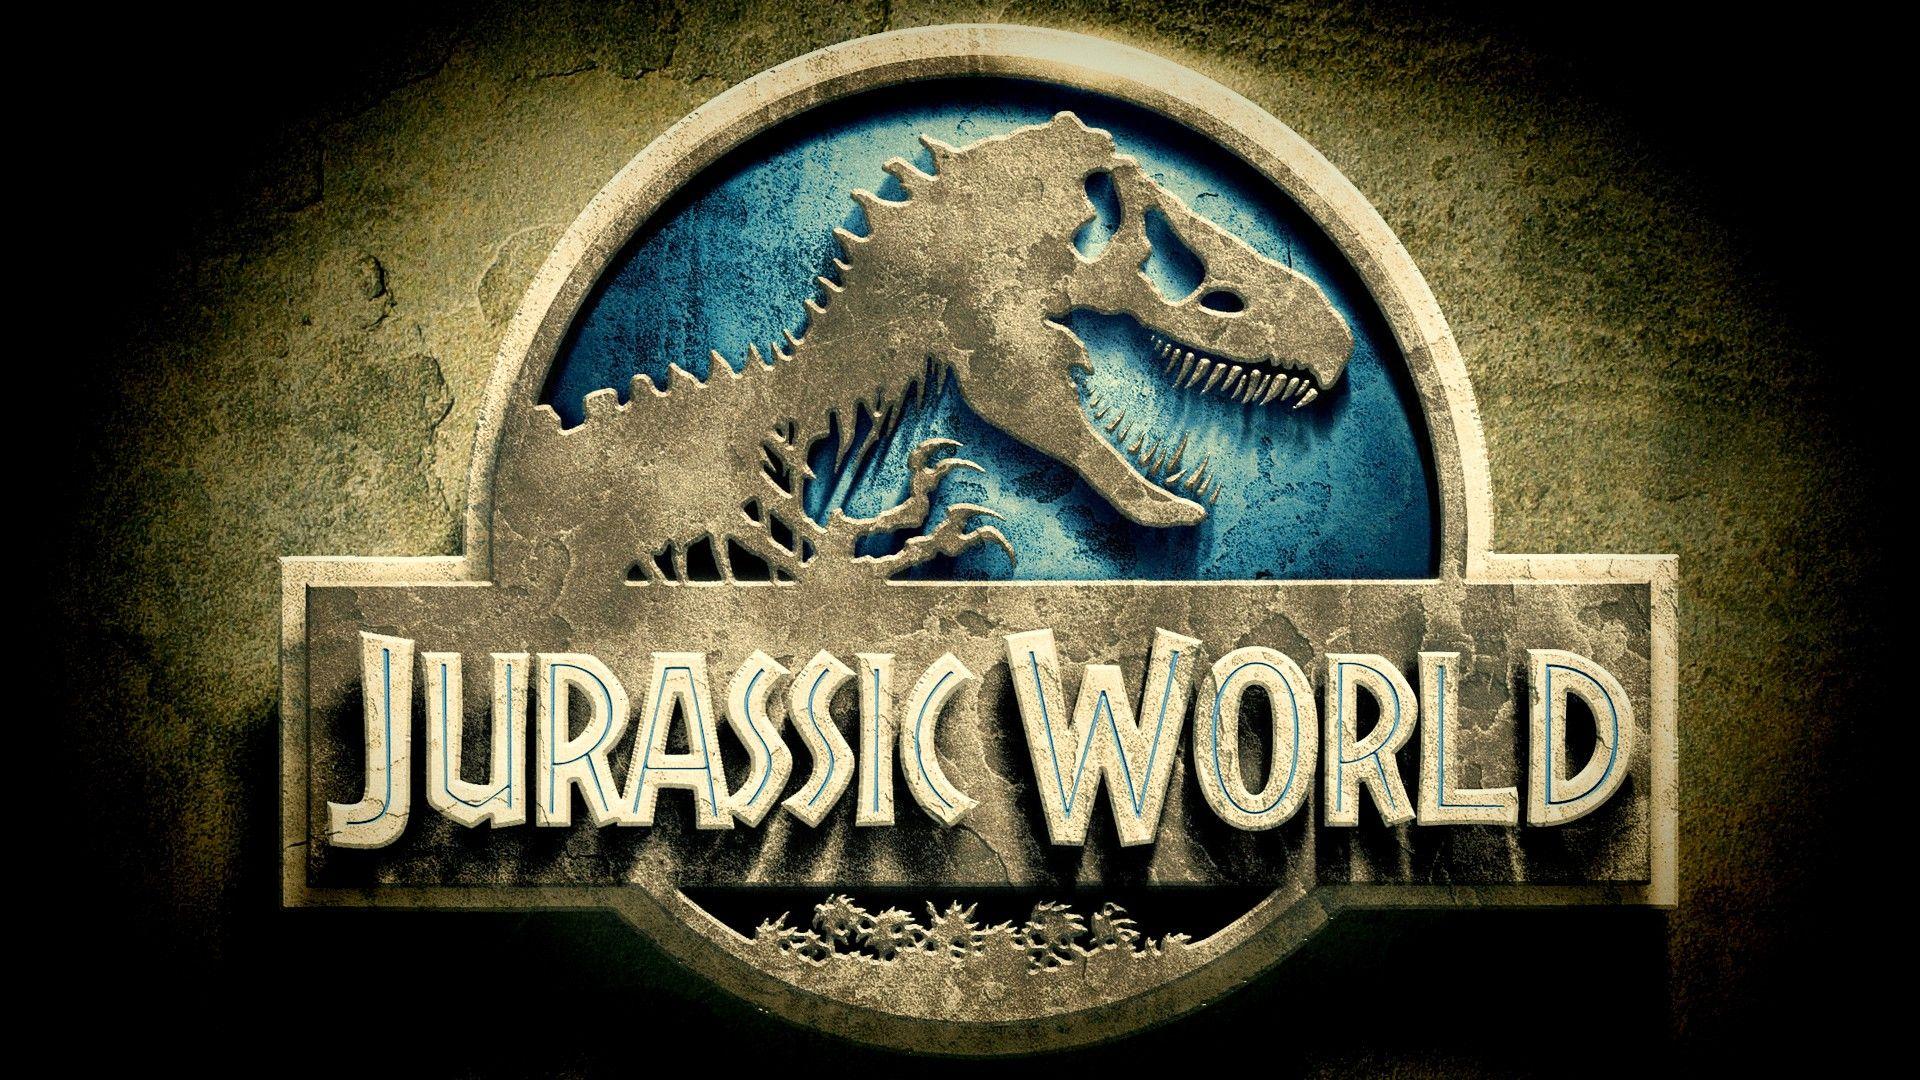 Jurassic World Movie Logo Wallpaper 49230 1920x1080 px